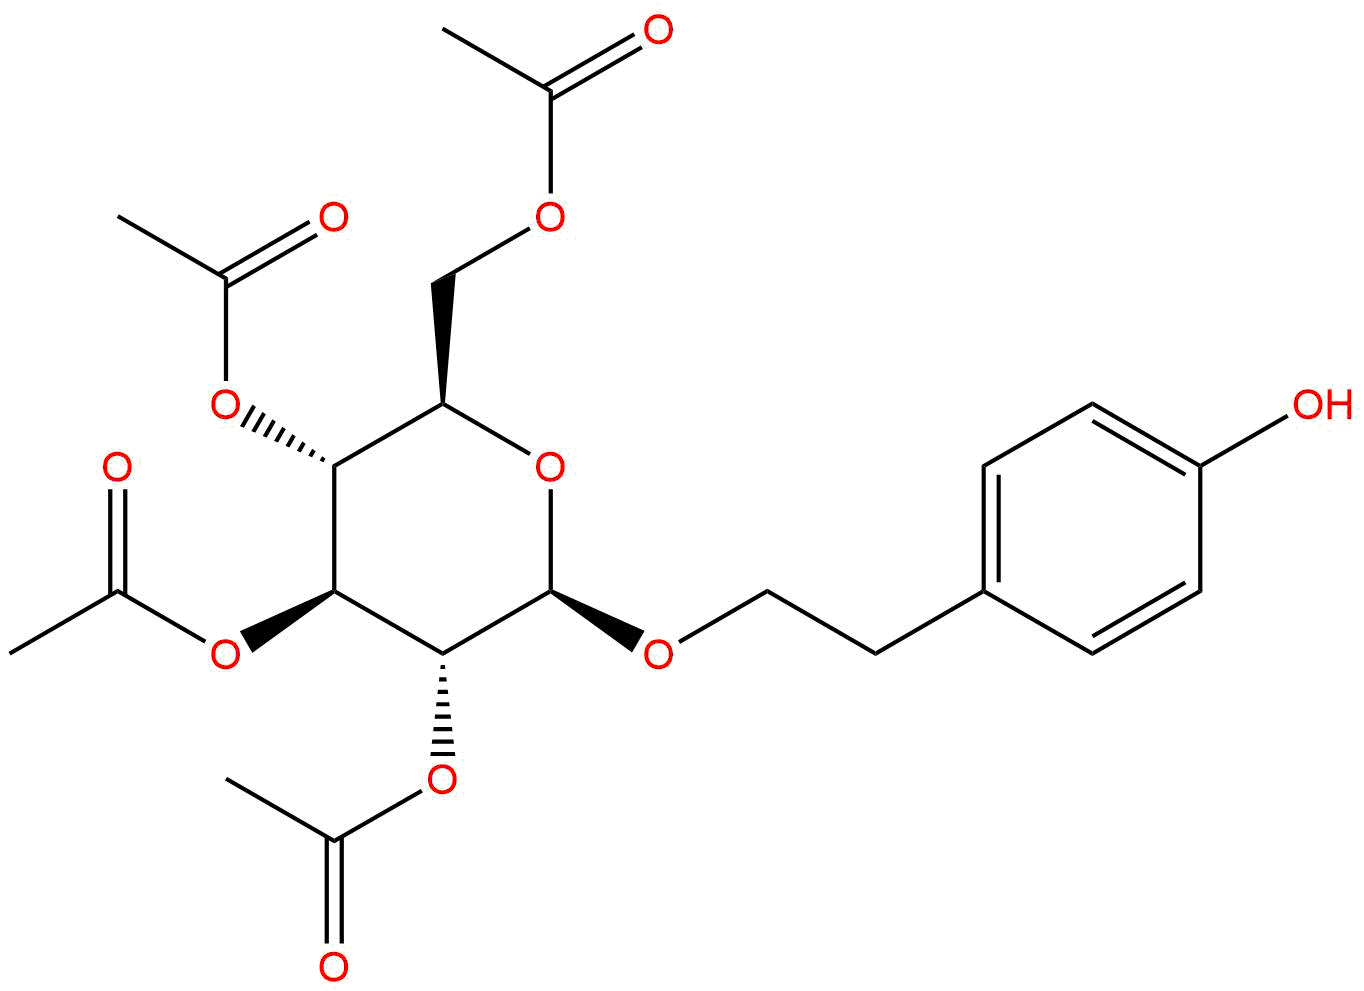 2,3,4,6-tetraacetate Salidroside